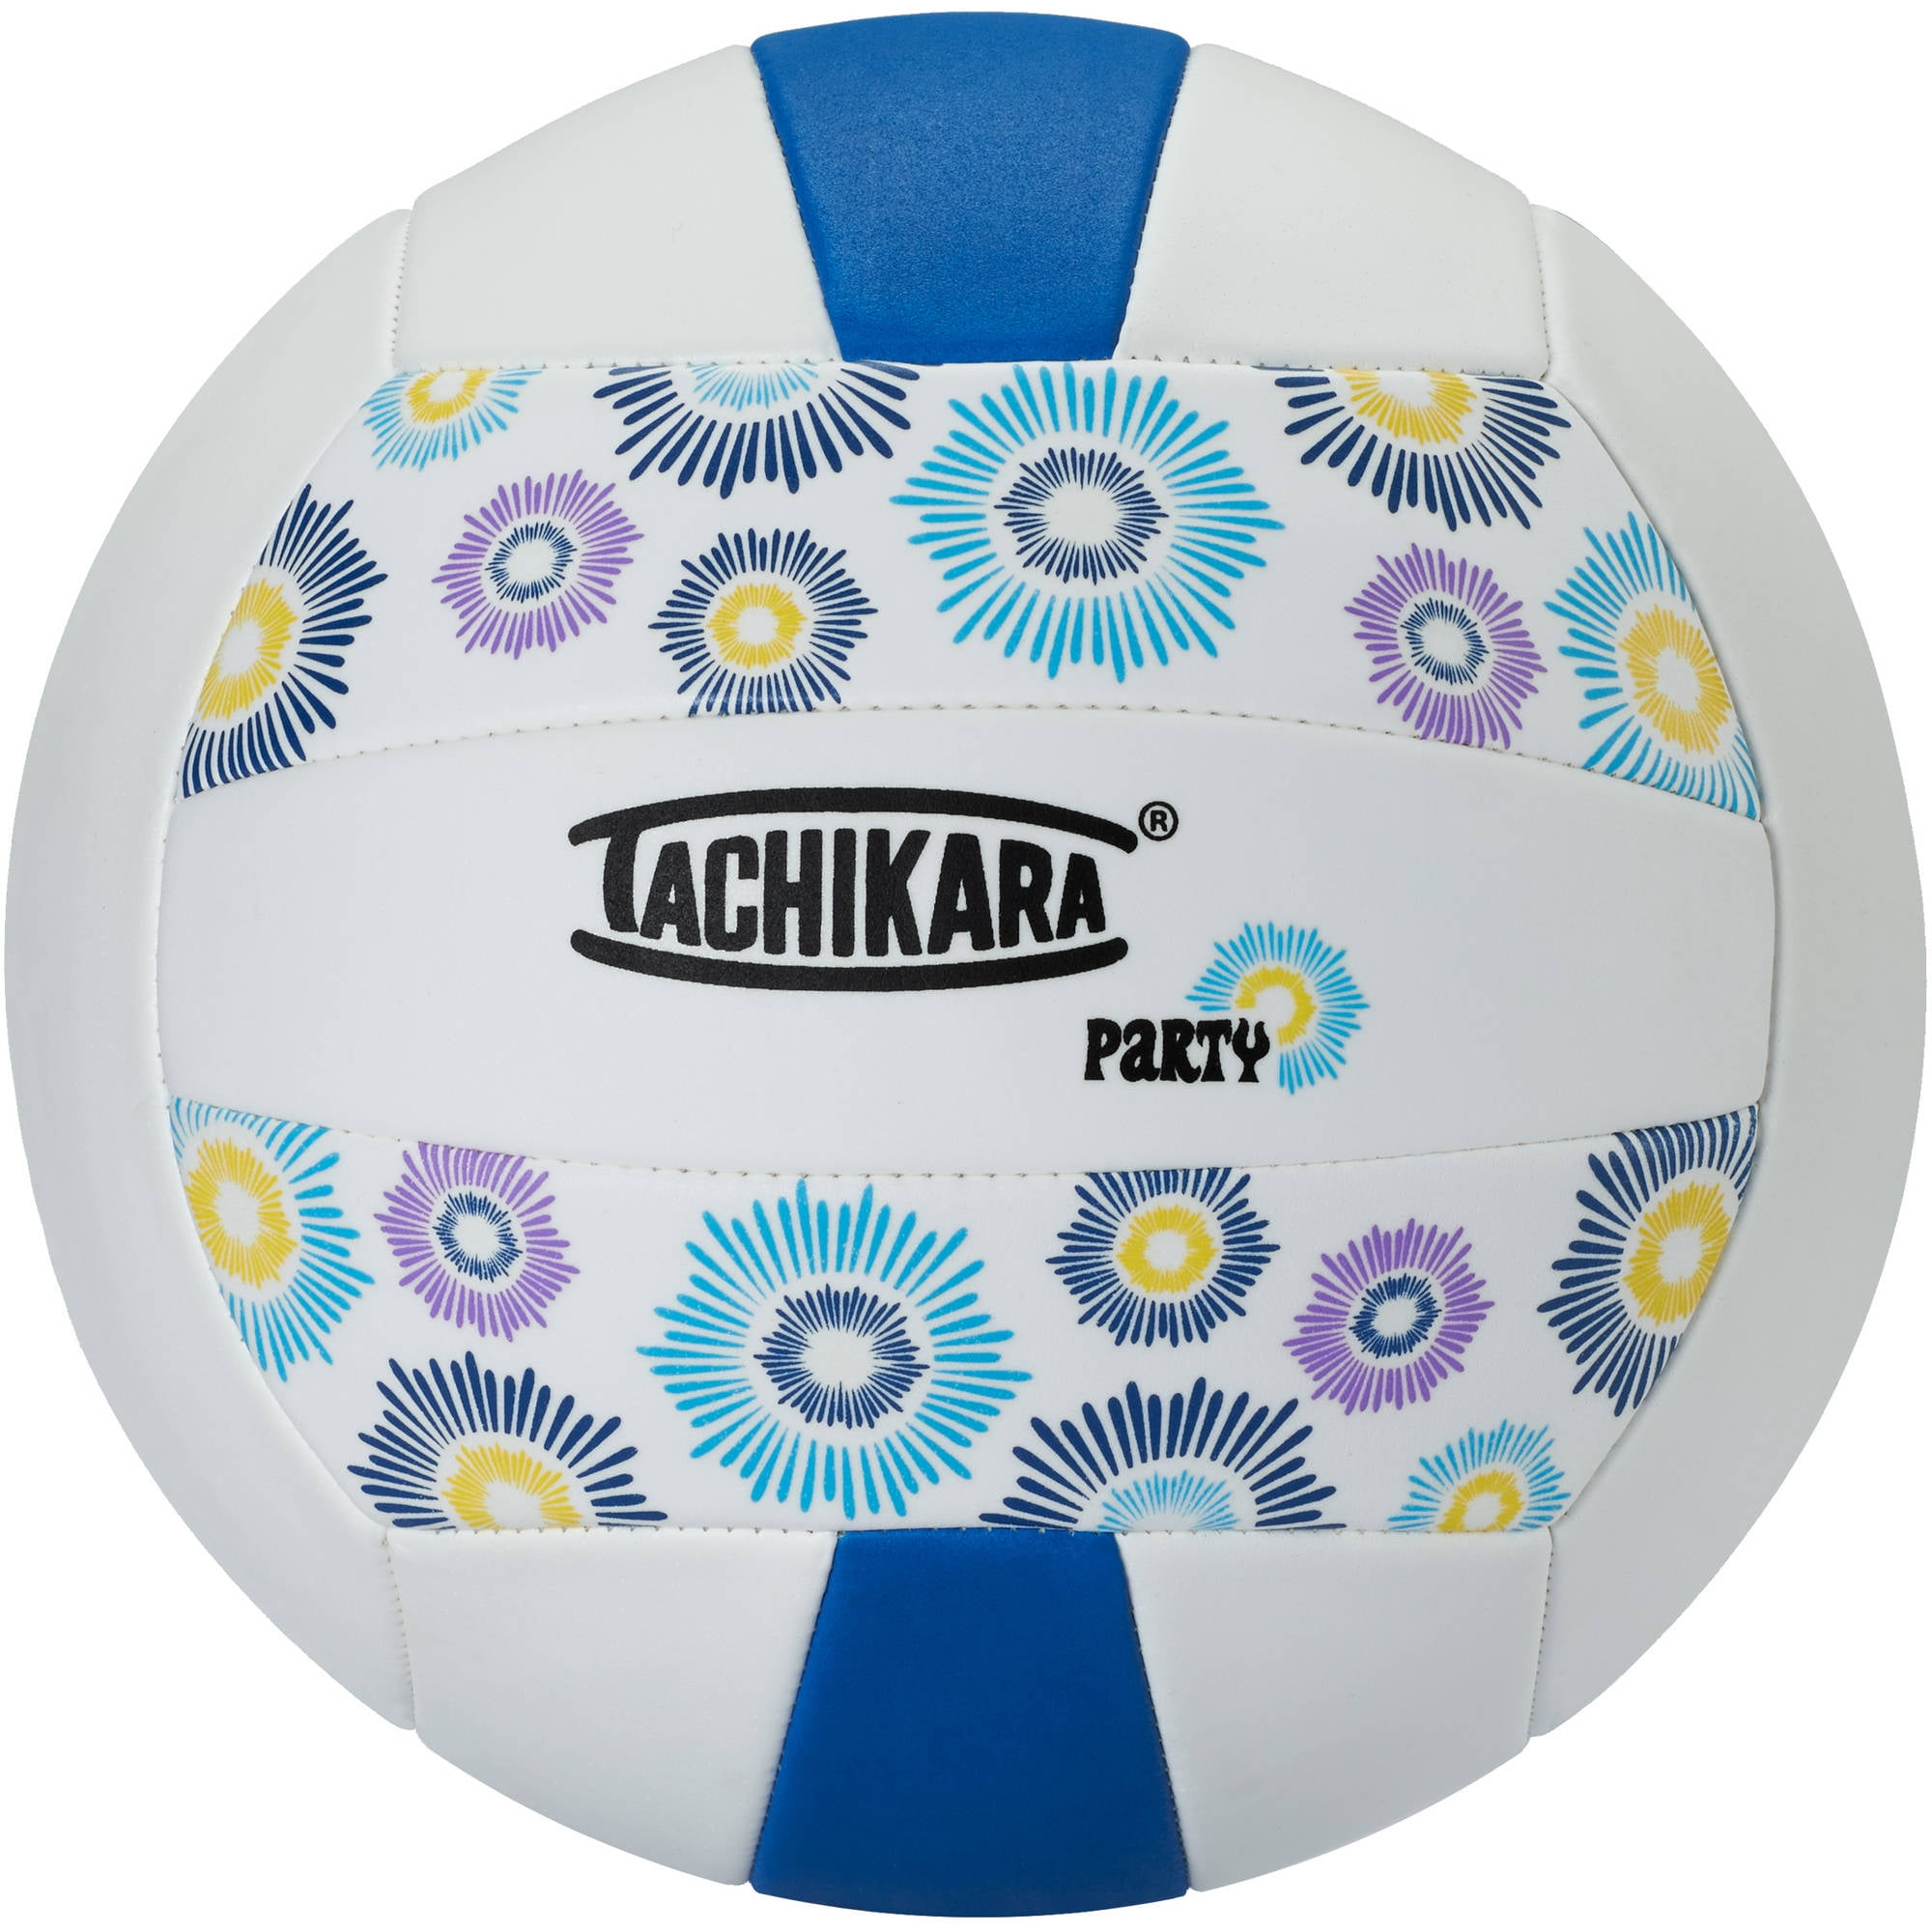 Tachikara NO STING Volleyball Party 